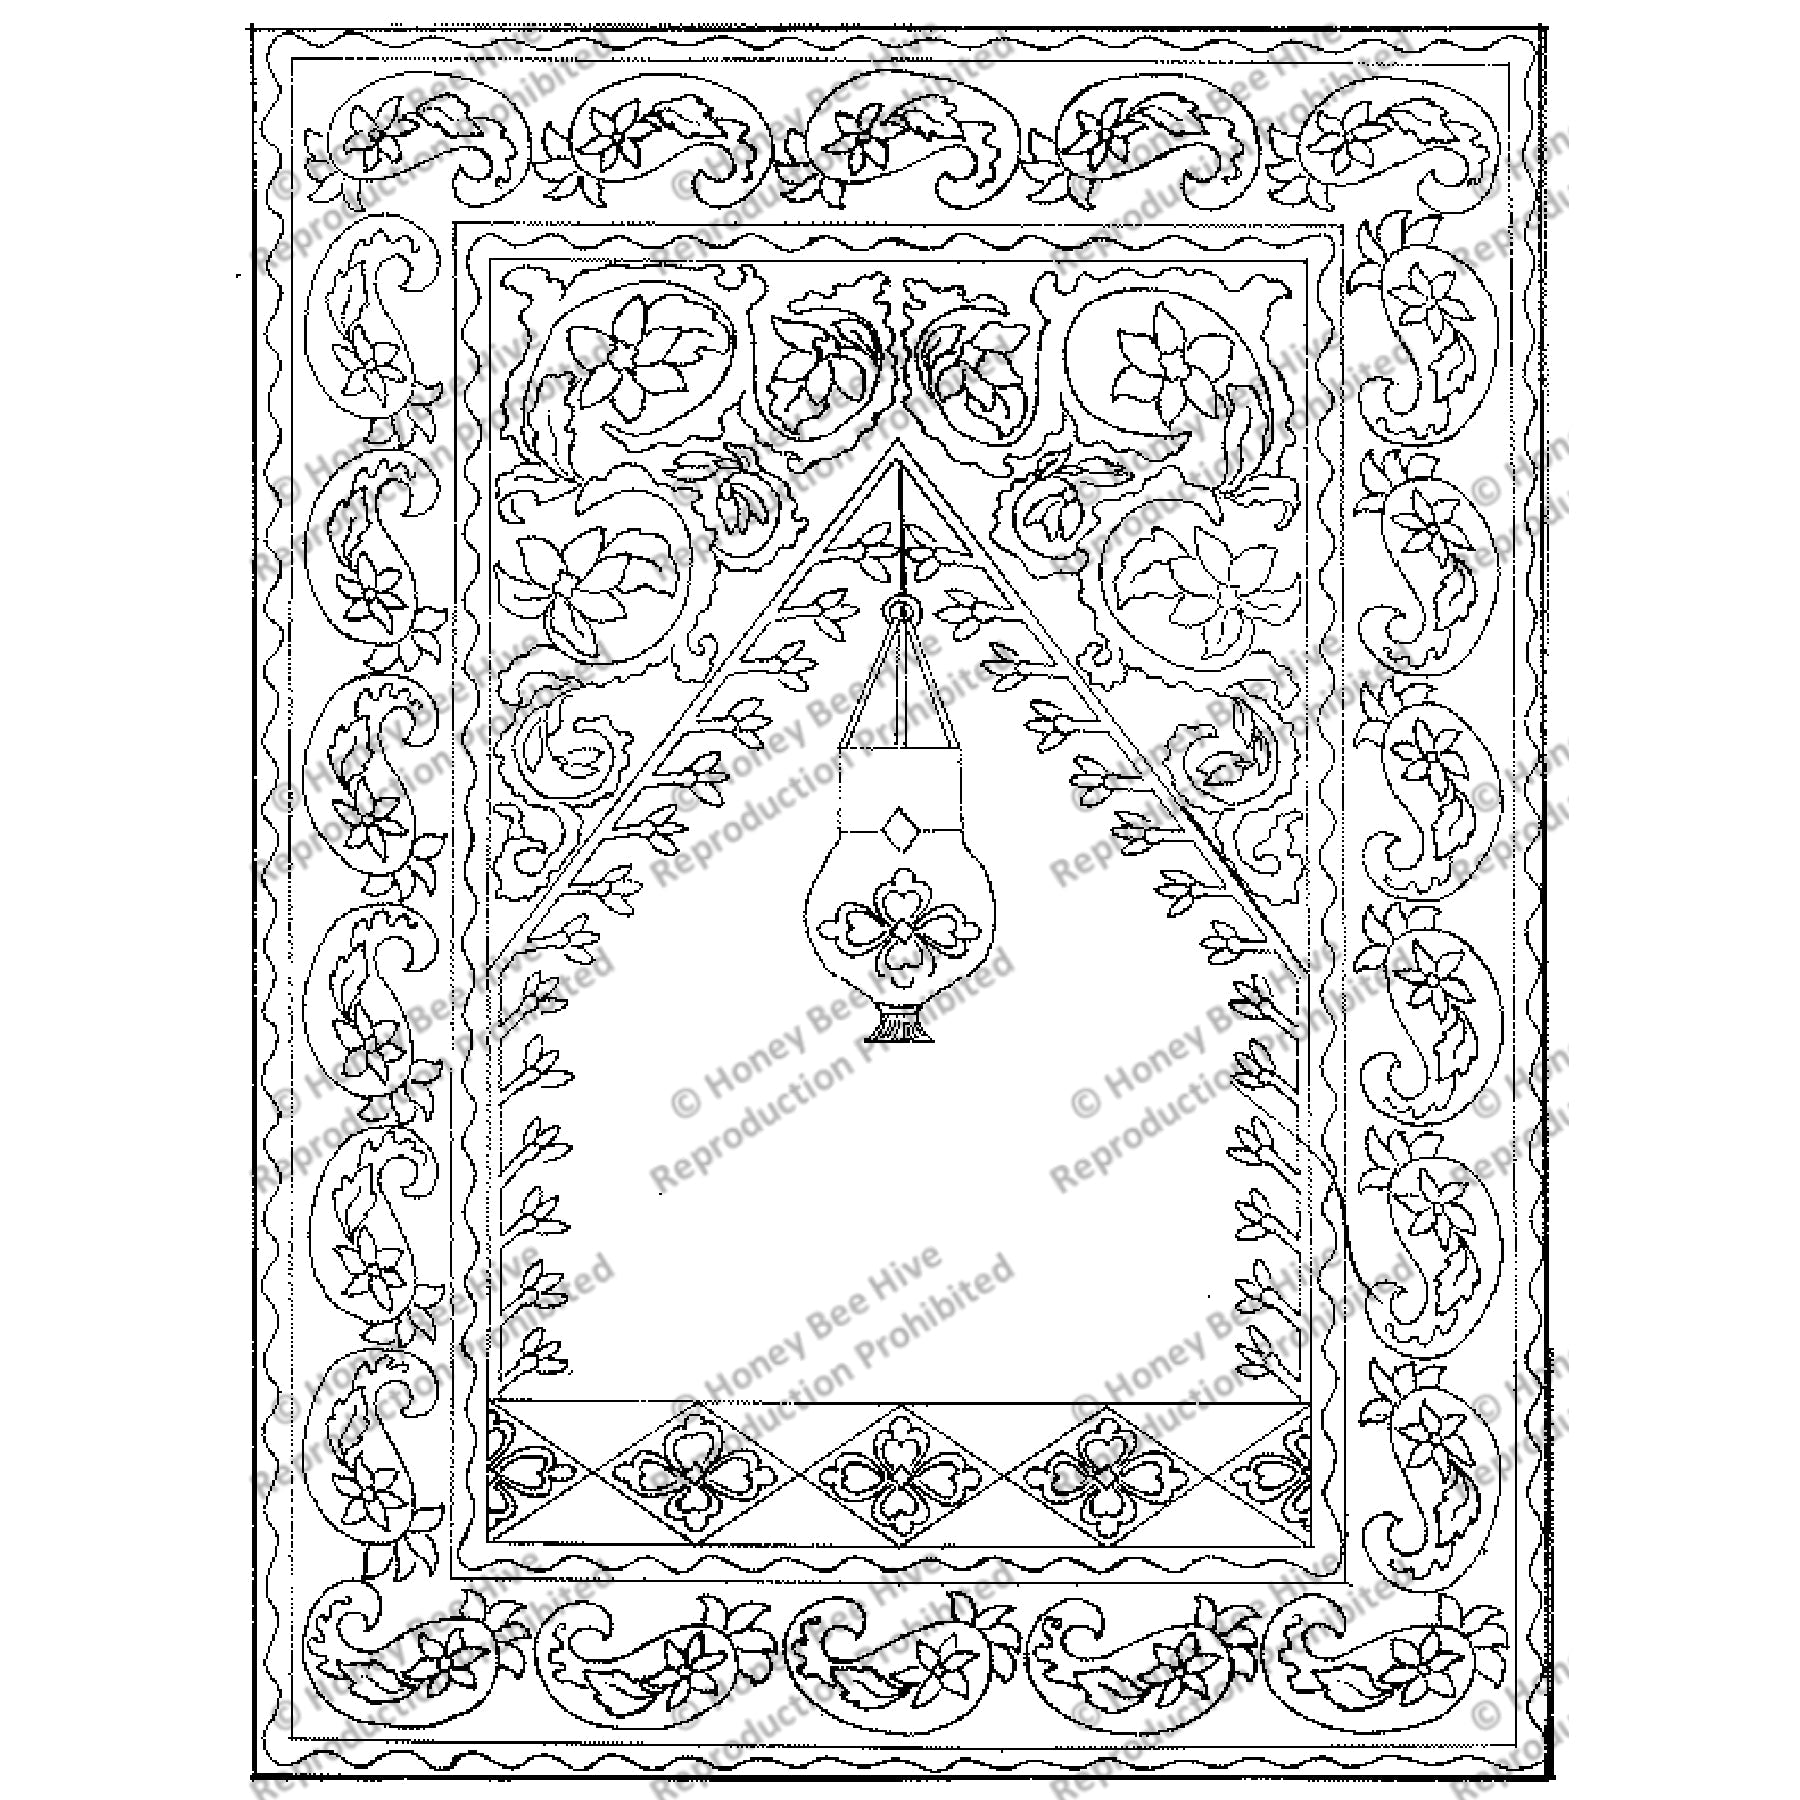 Persian Prayer Rug, rug hooking pattern